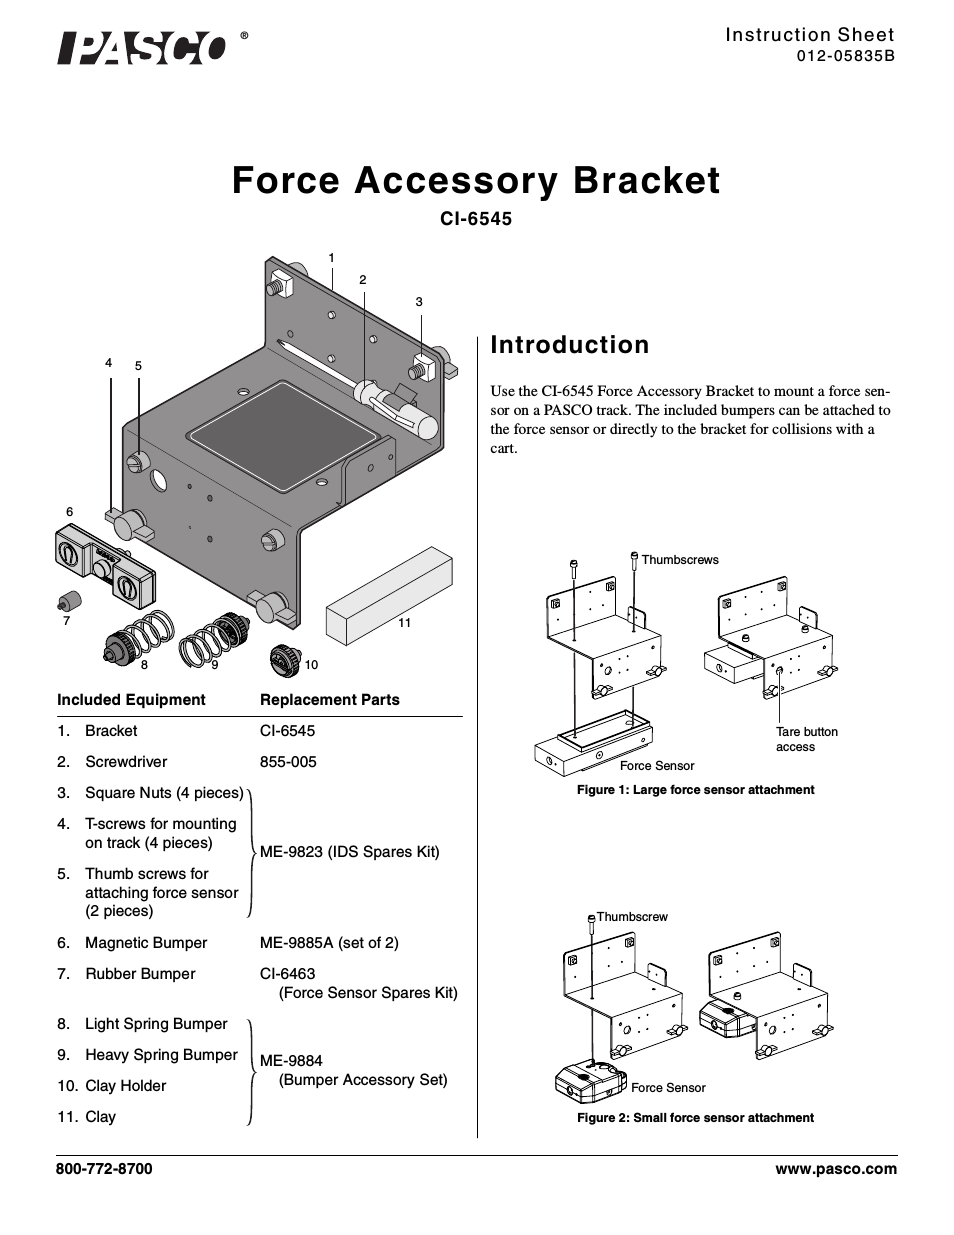 CI-6545 Force Accessory Bracket